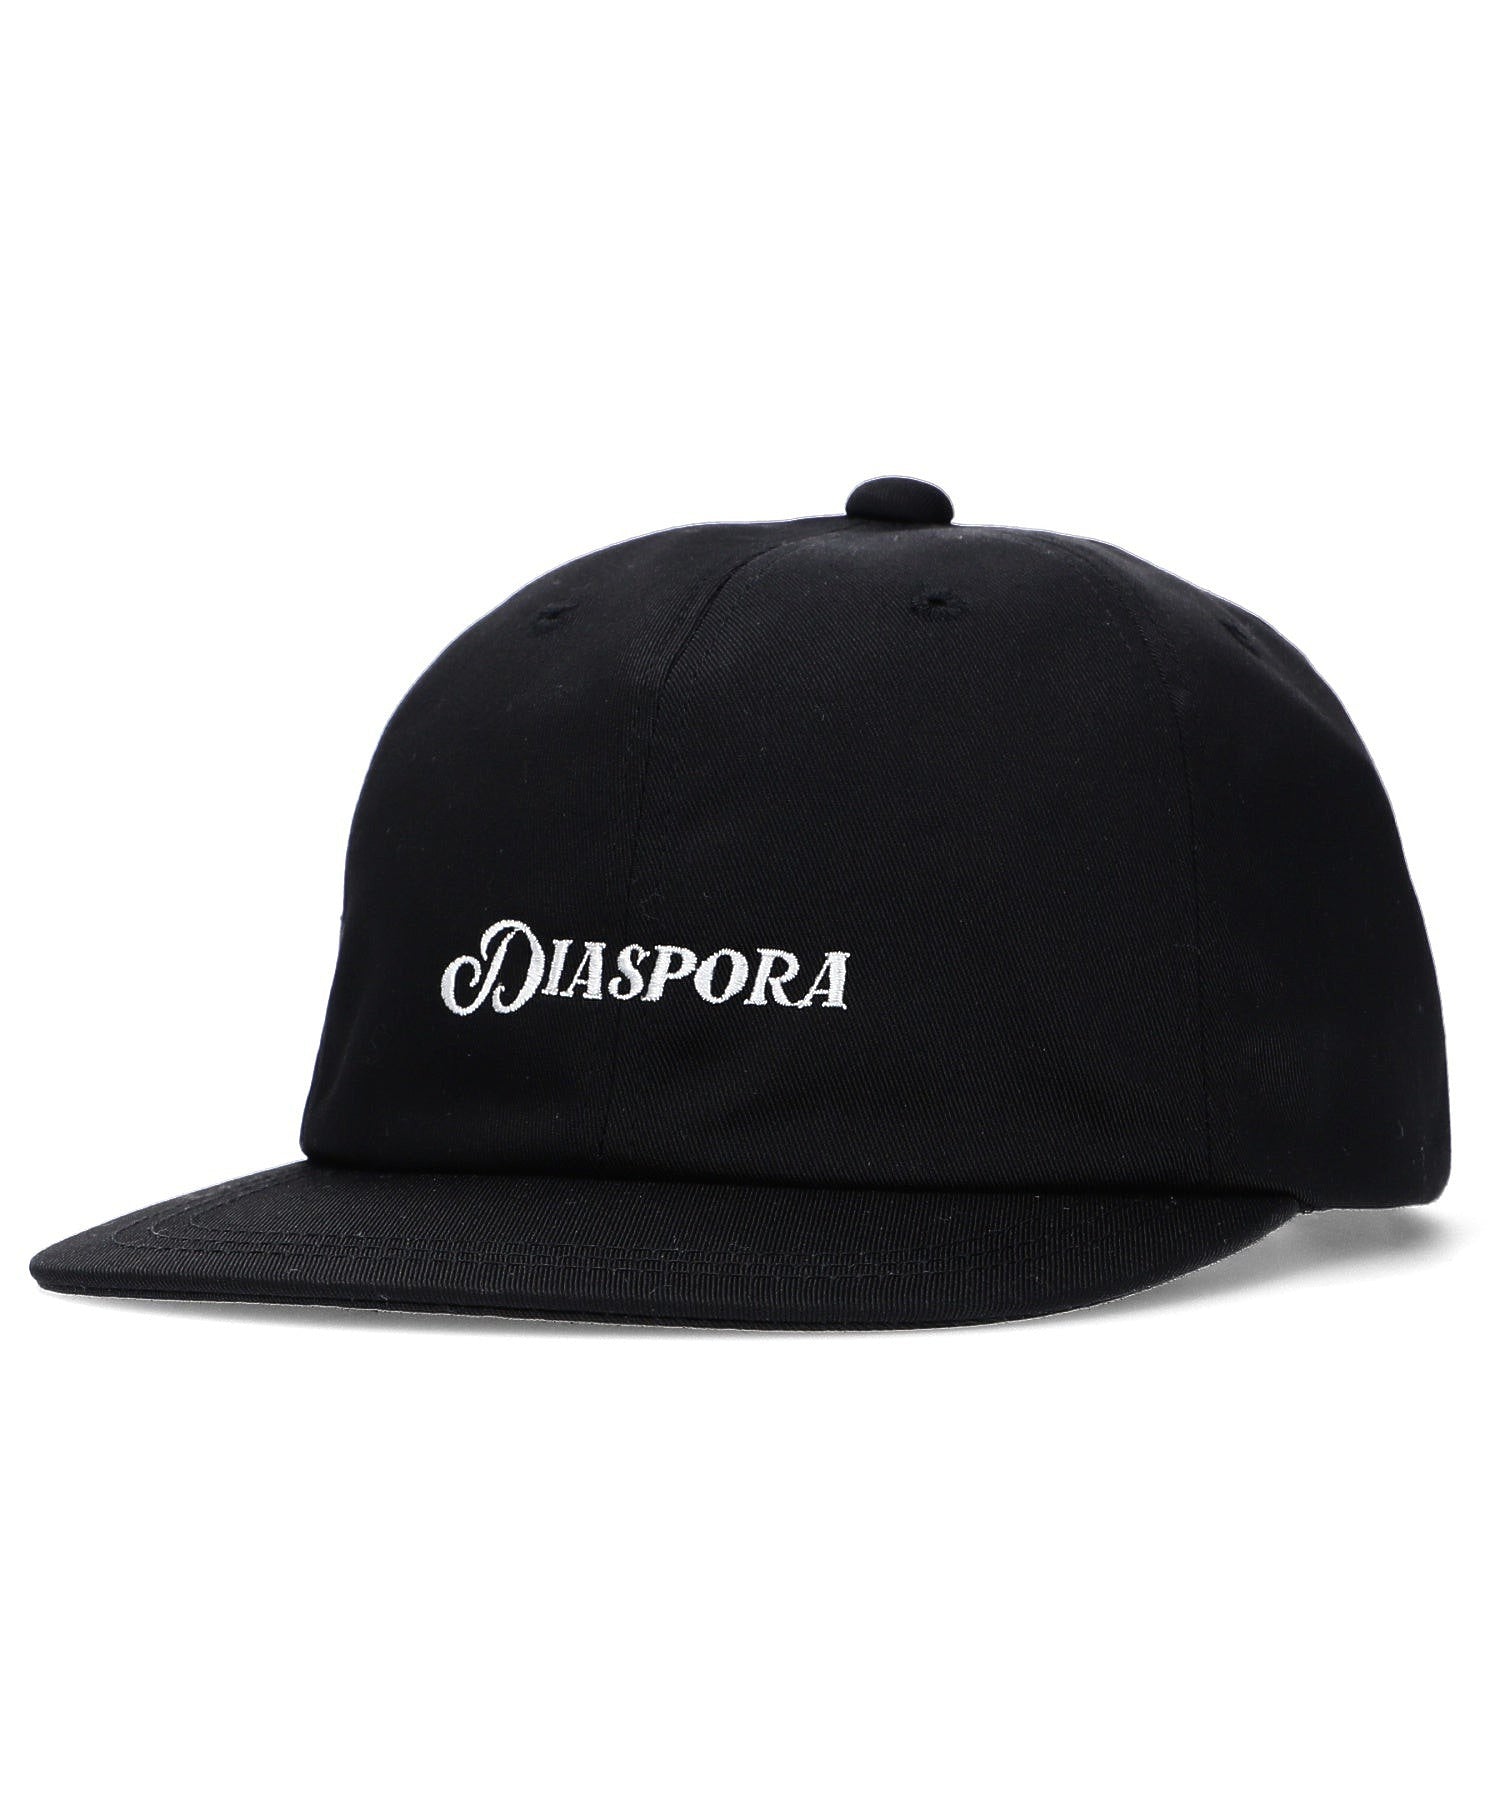 Diaspora Skateboards/ディアスポラスケートボーズ/CASTANEA 6 PANEL CAP/HW03